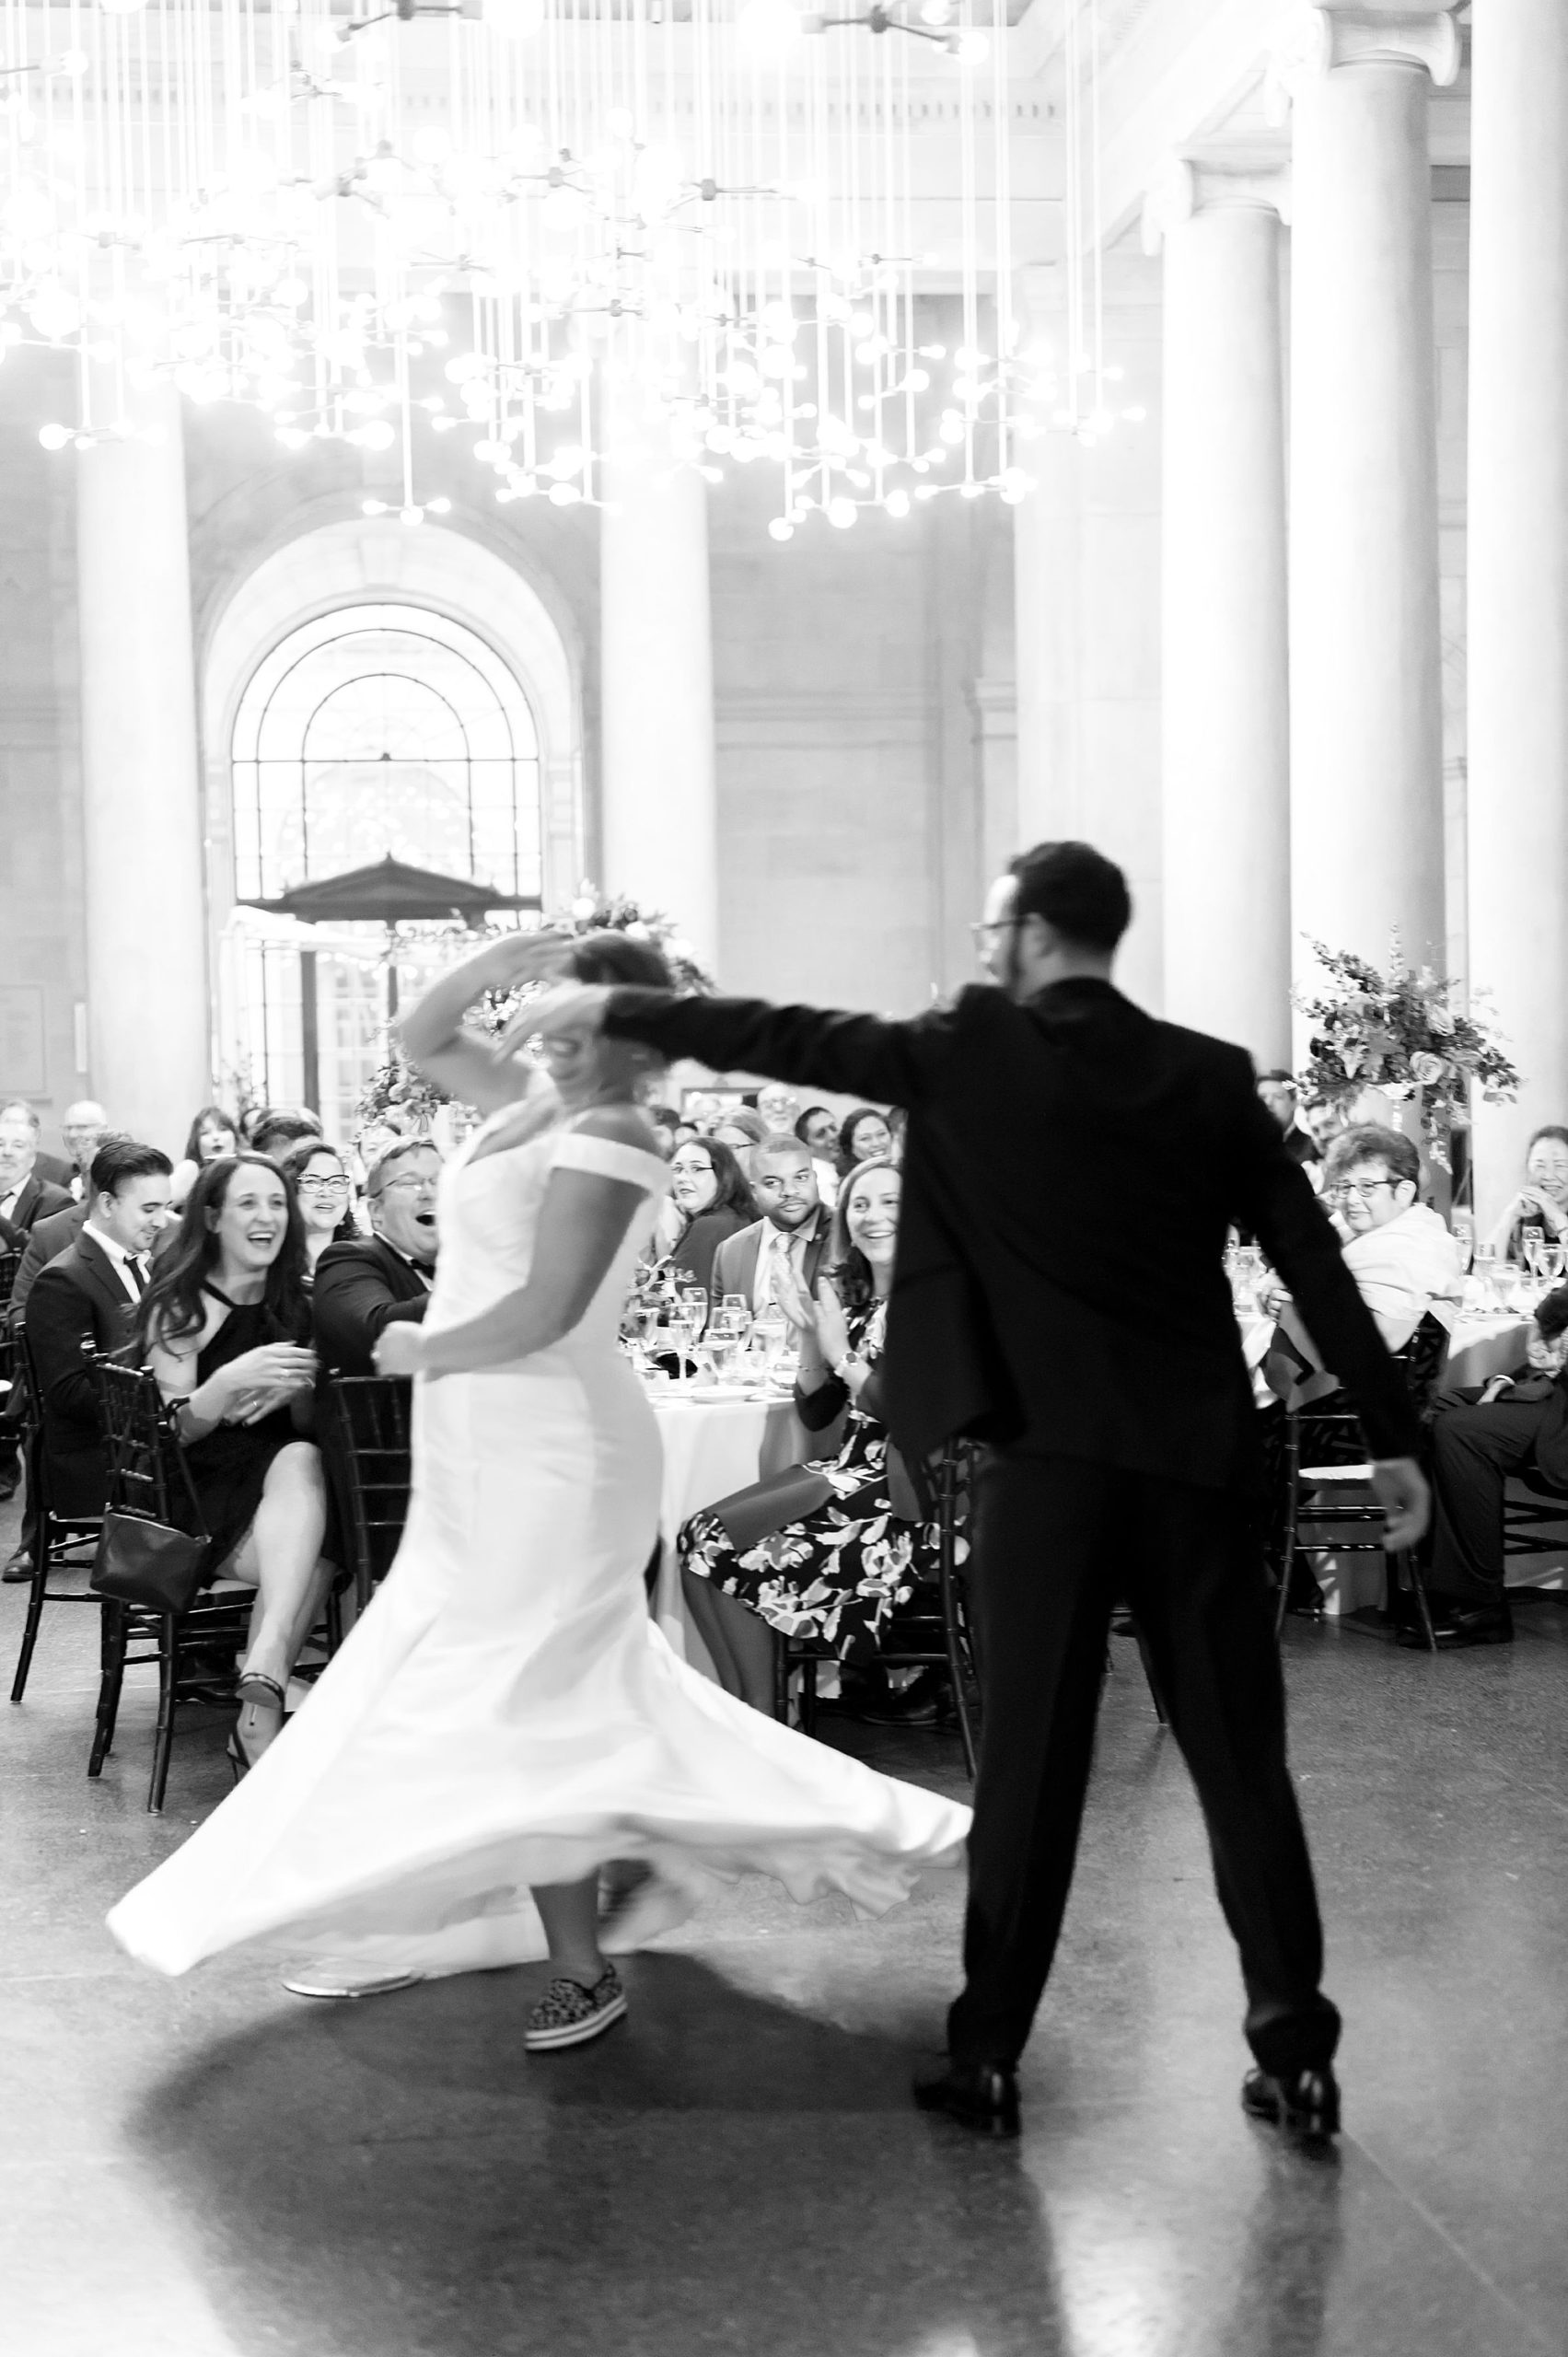 groom twirls bride during first dance at wedding reception in Baltimore MD